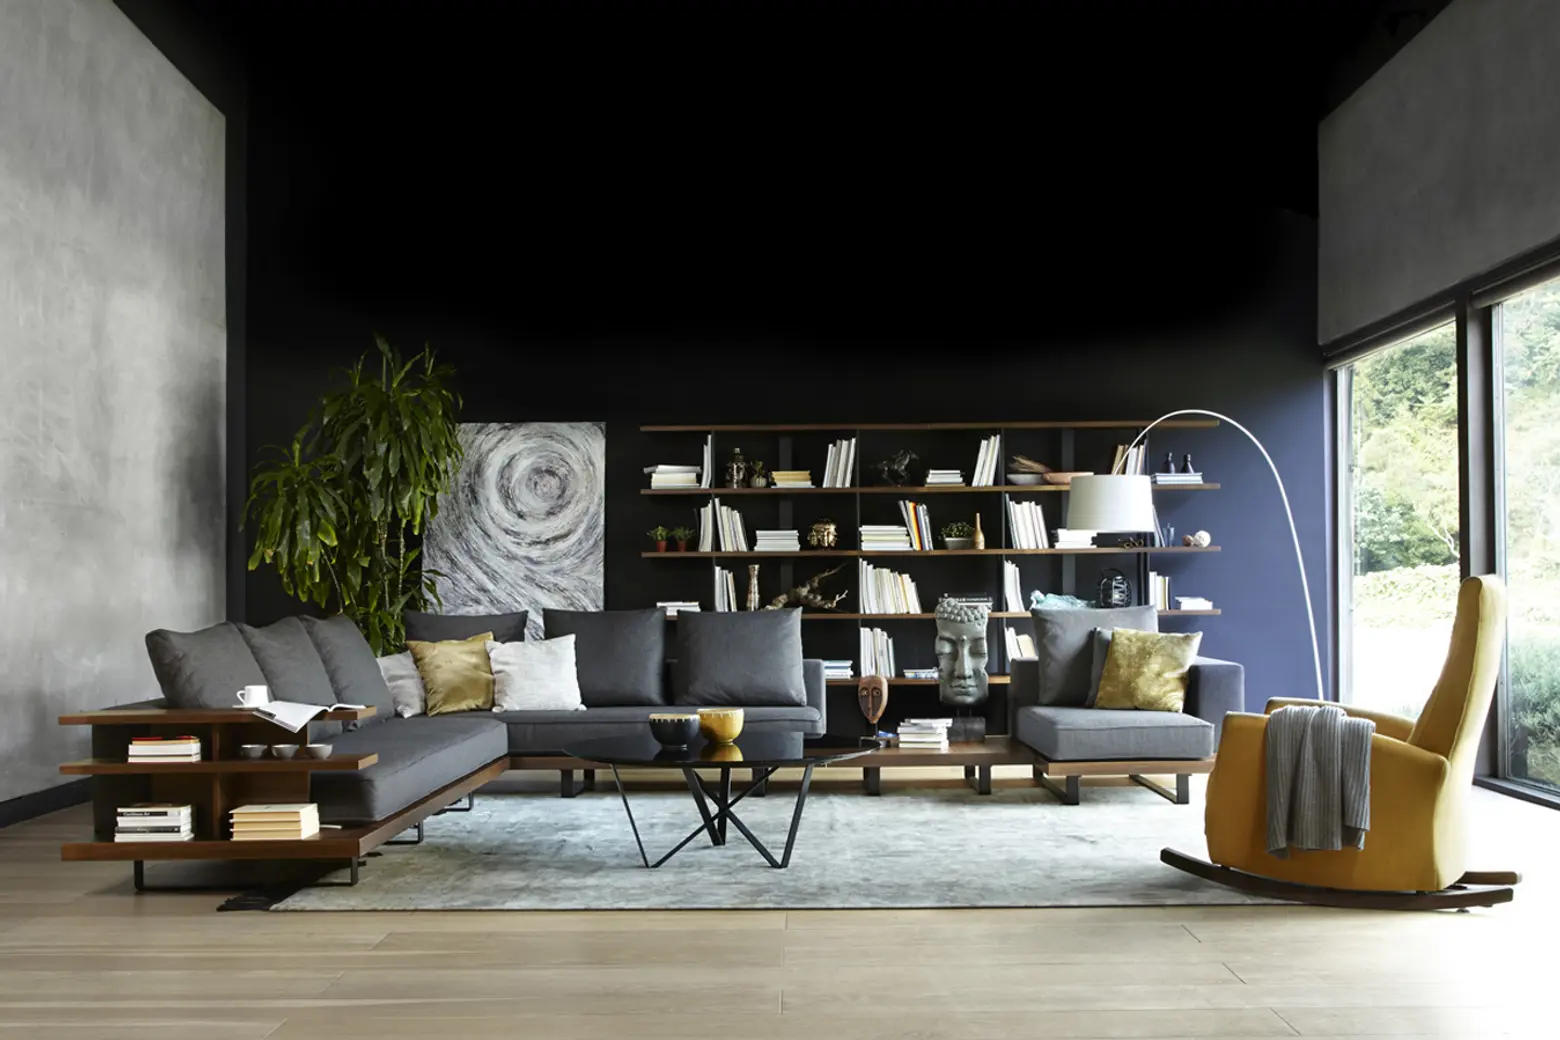 gazel sofa, sofas with storage, koleksiyon